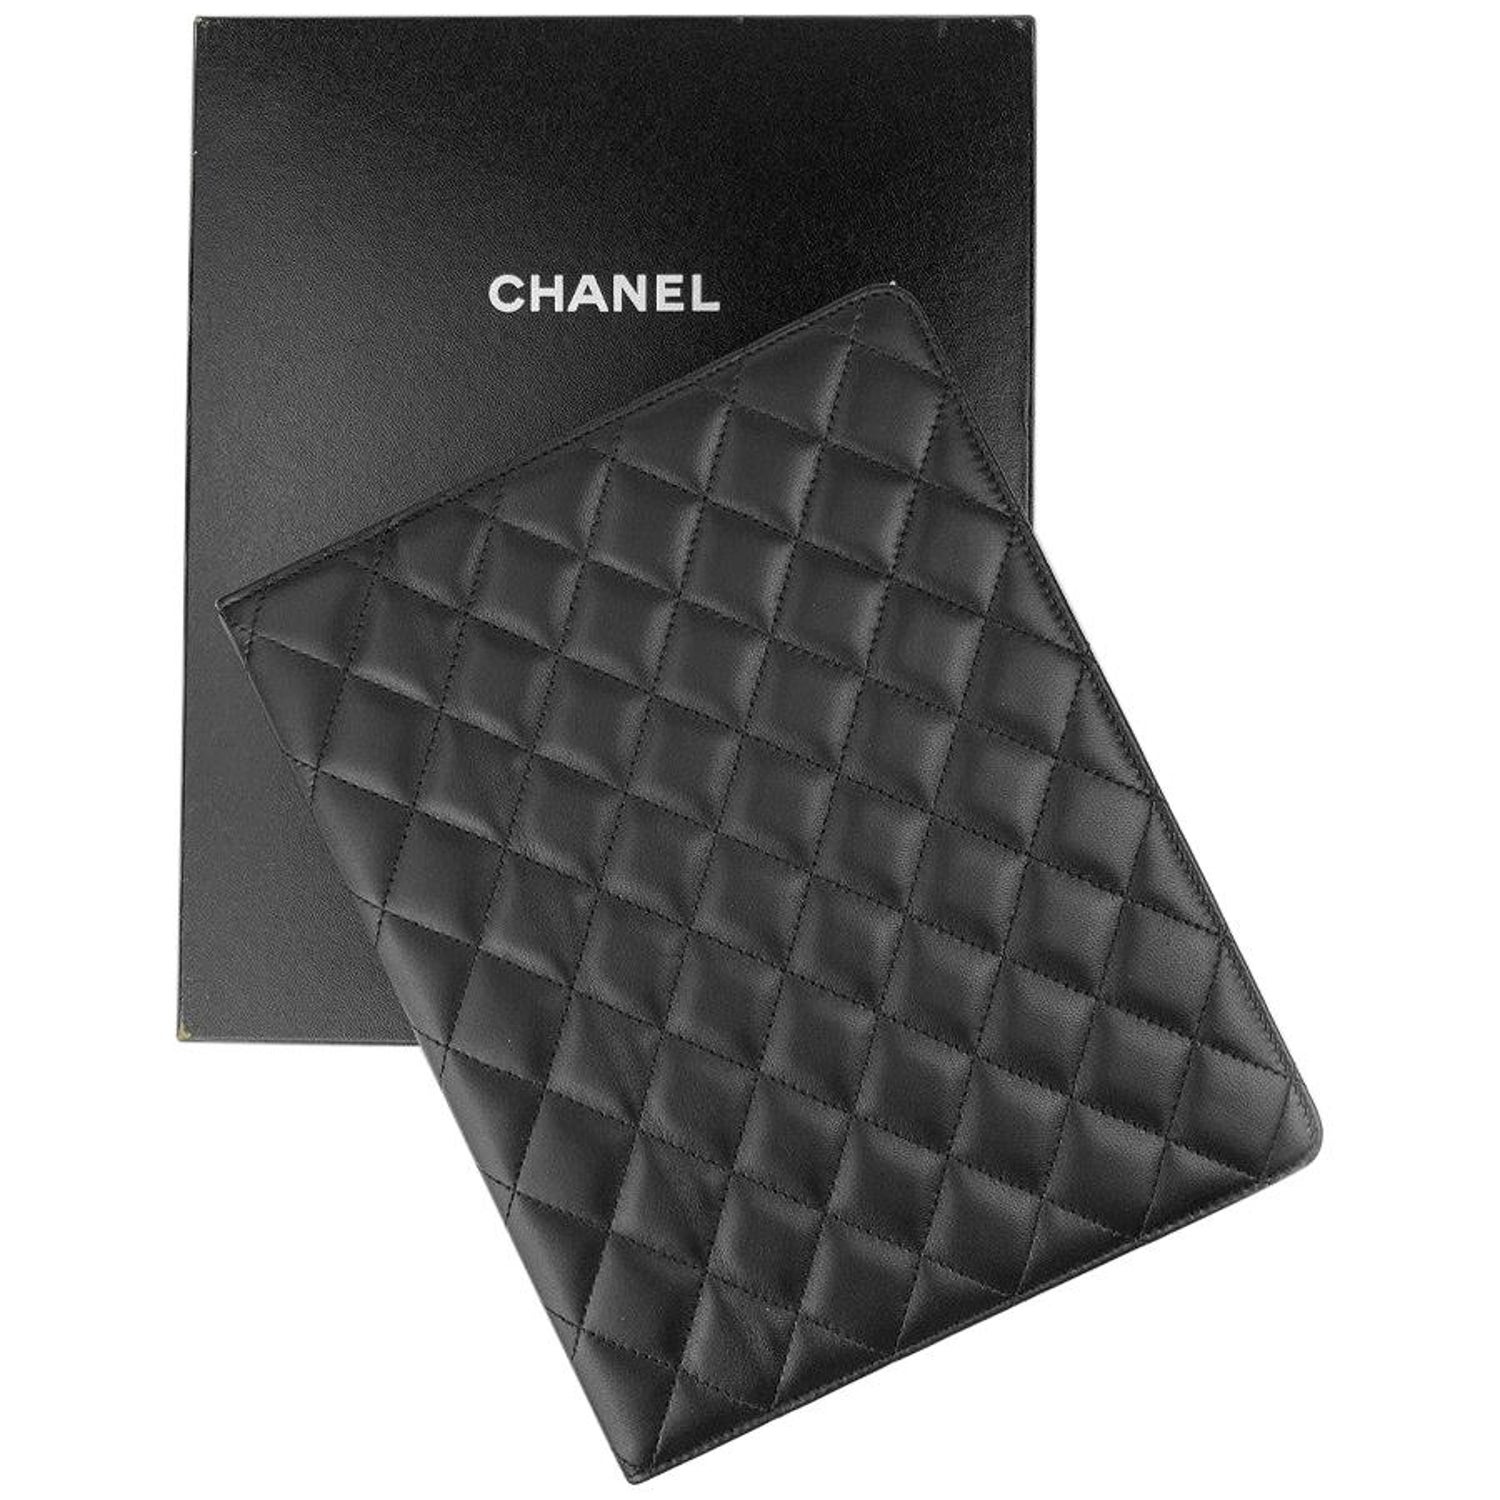 Chanel iPad Mini Case – Loop Generation